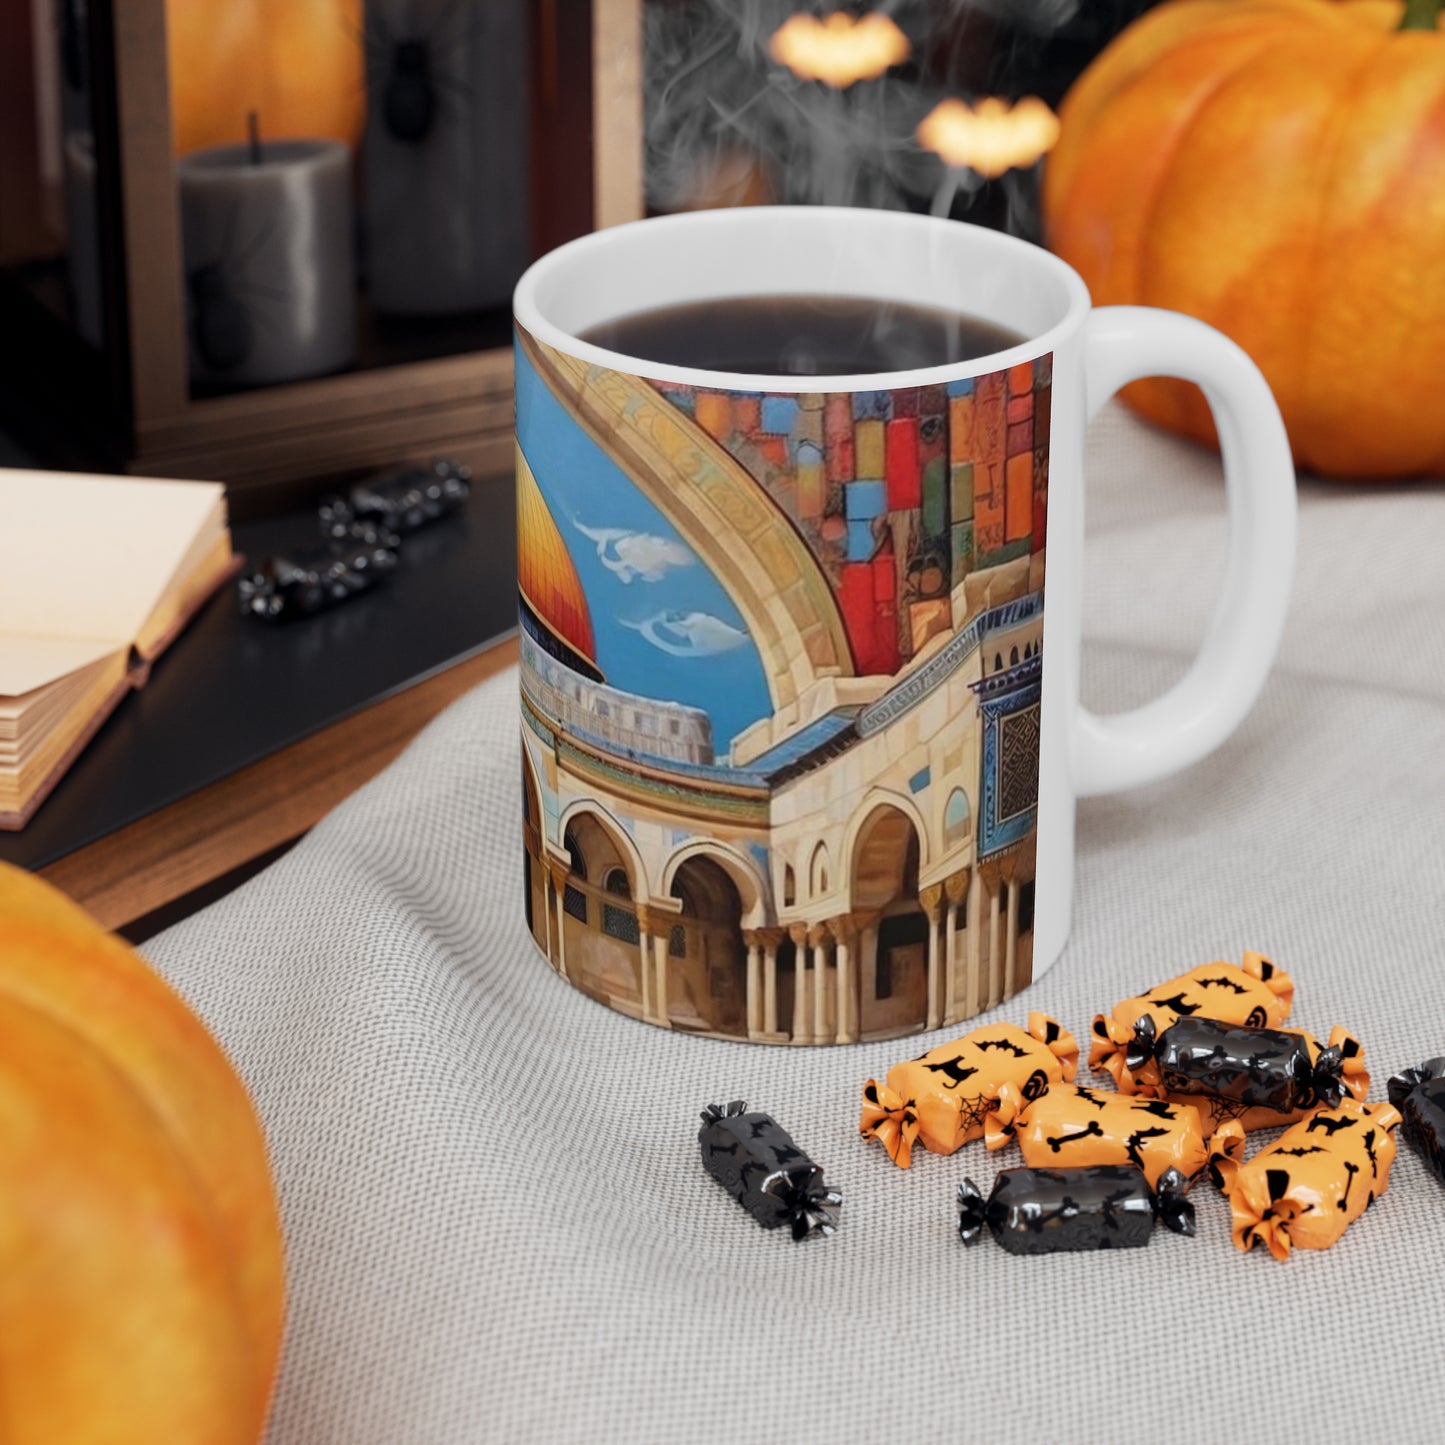 Masjid Al-Aqsa Mosque Artwork Mug - Ceramic Coffee Mug 11oz